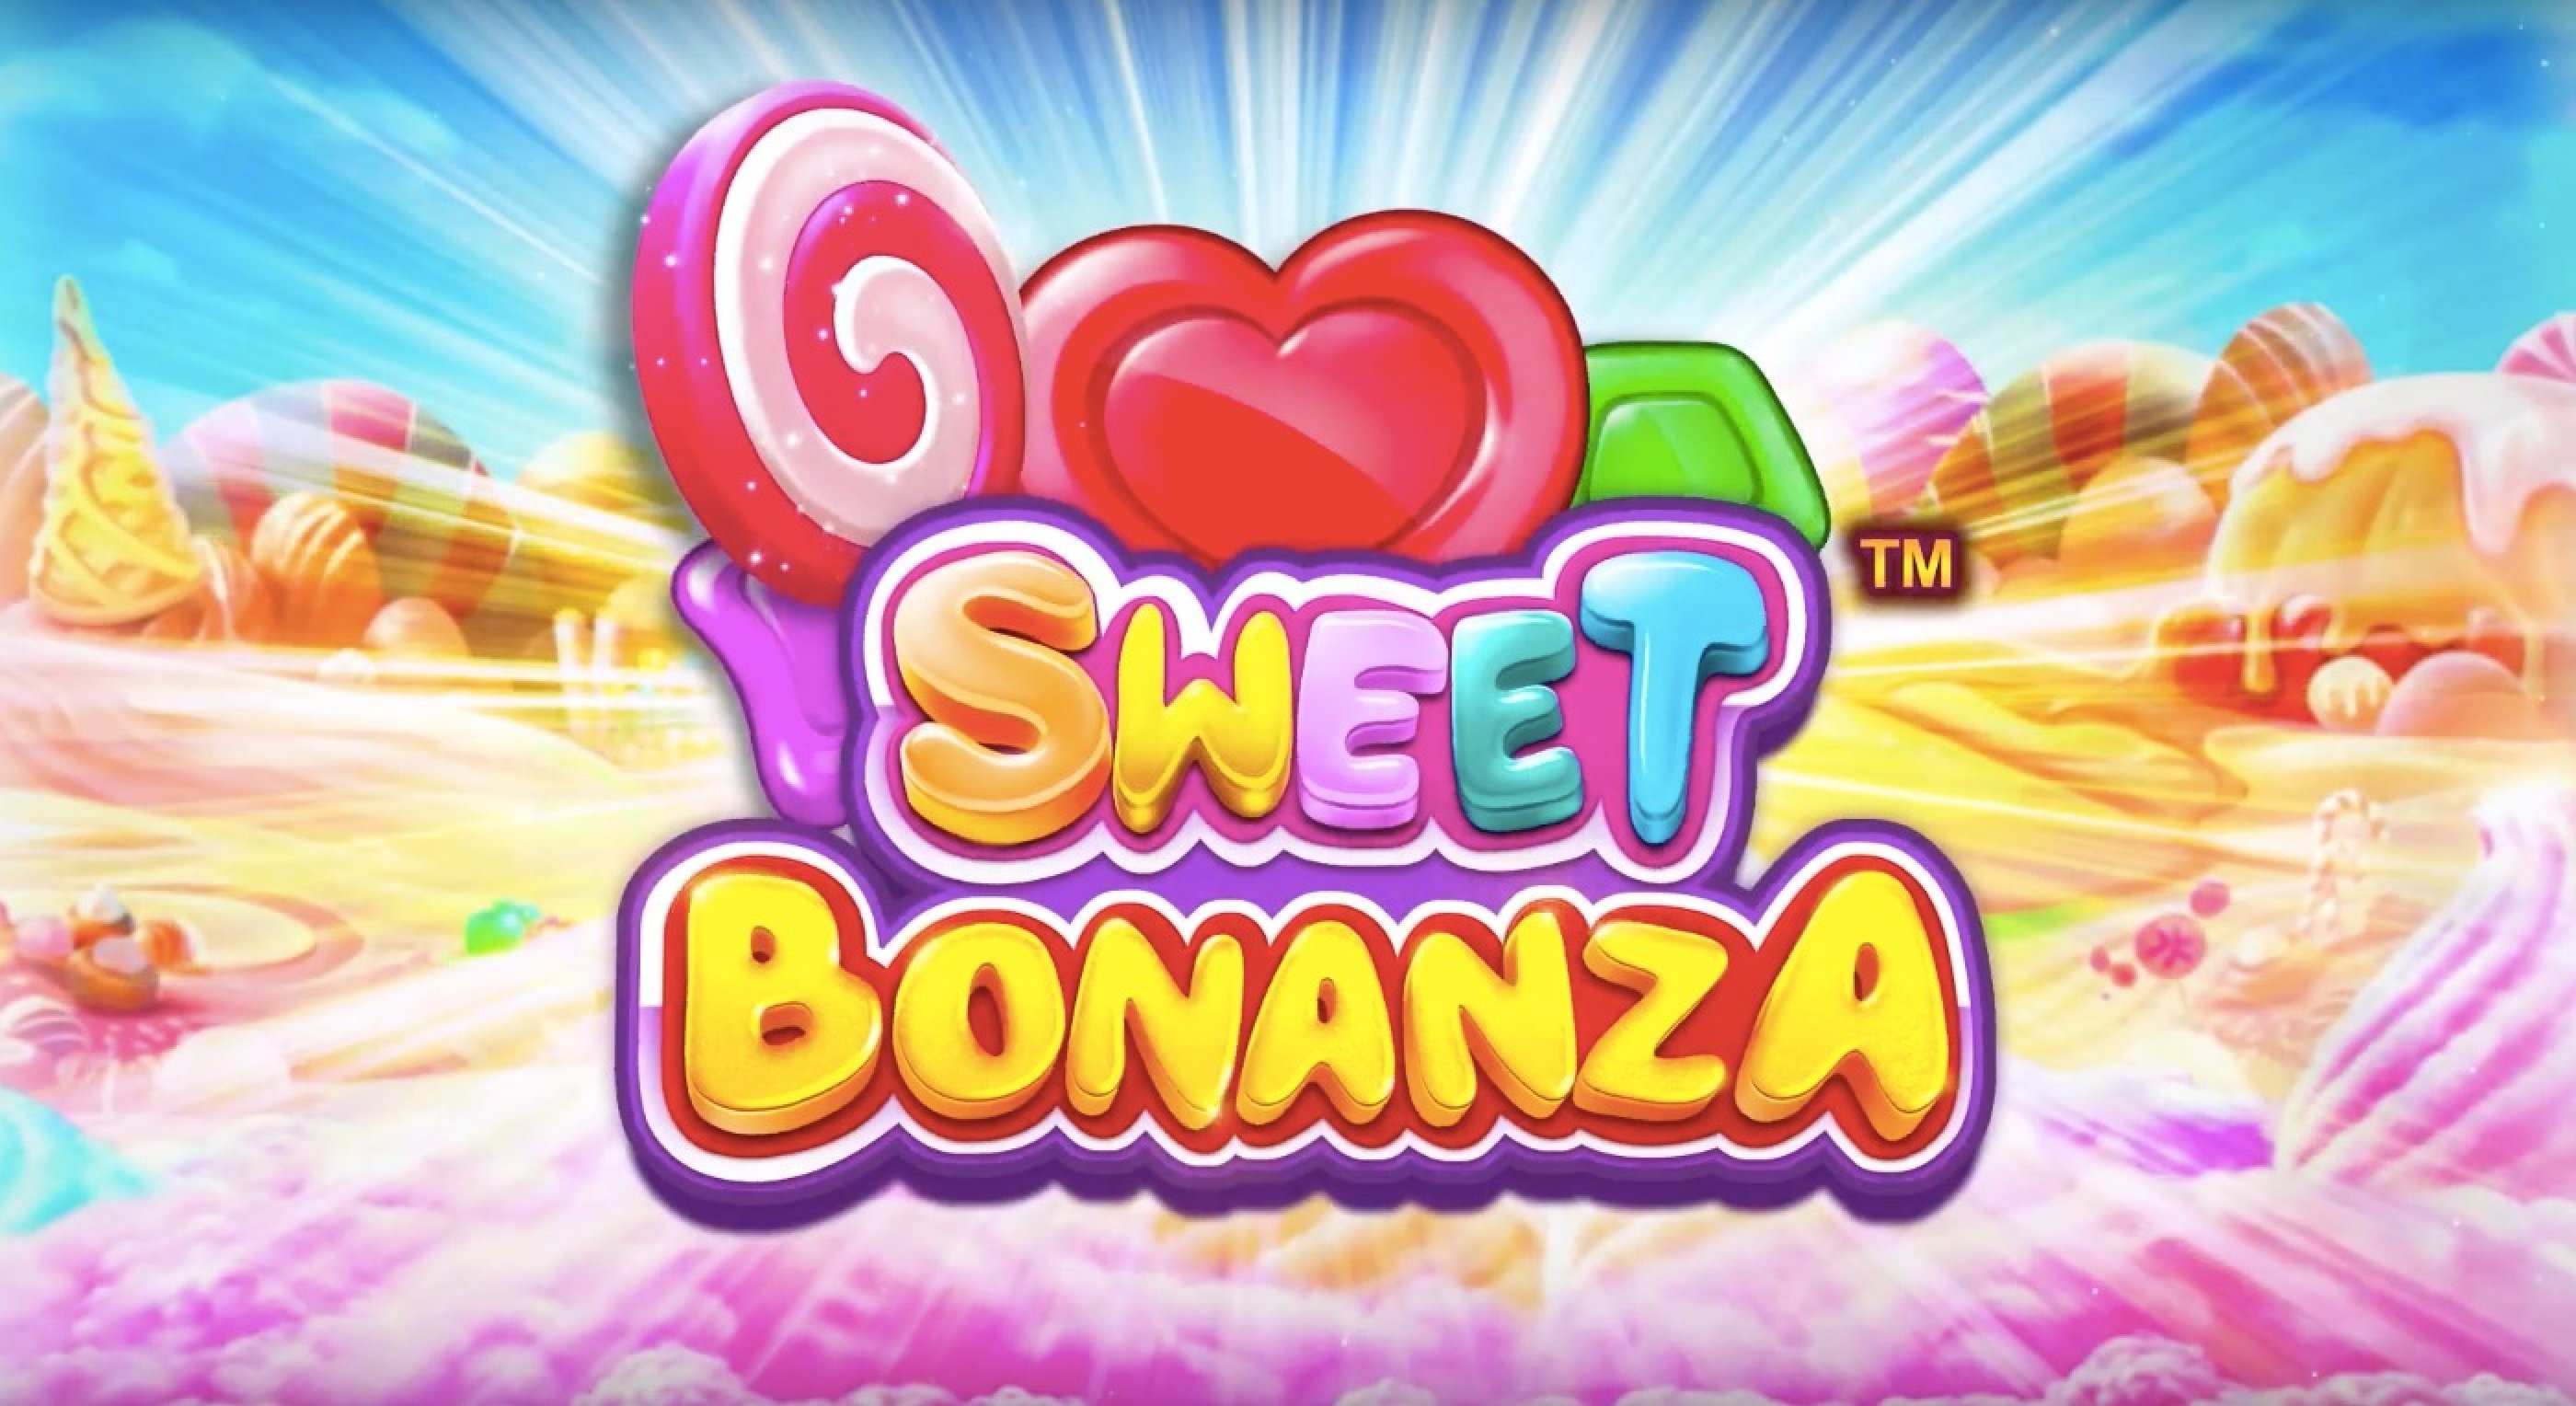 The Sweet Bonanza Online Slot Demo Game by Pragmatic Play